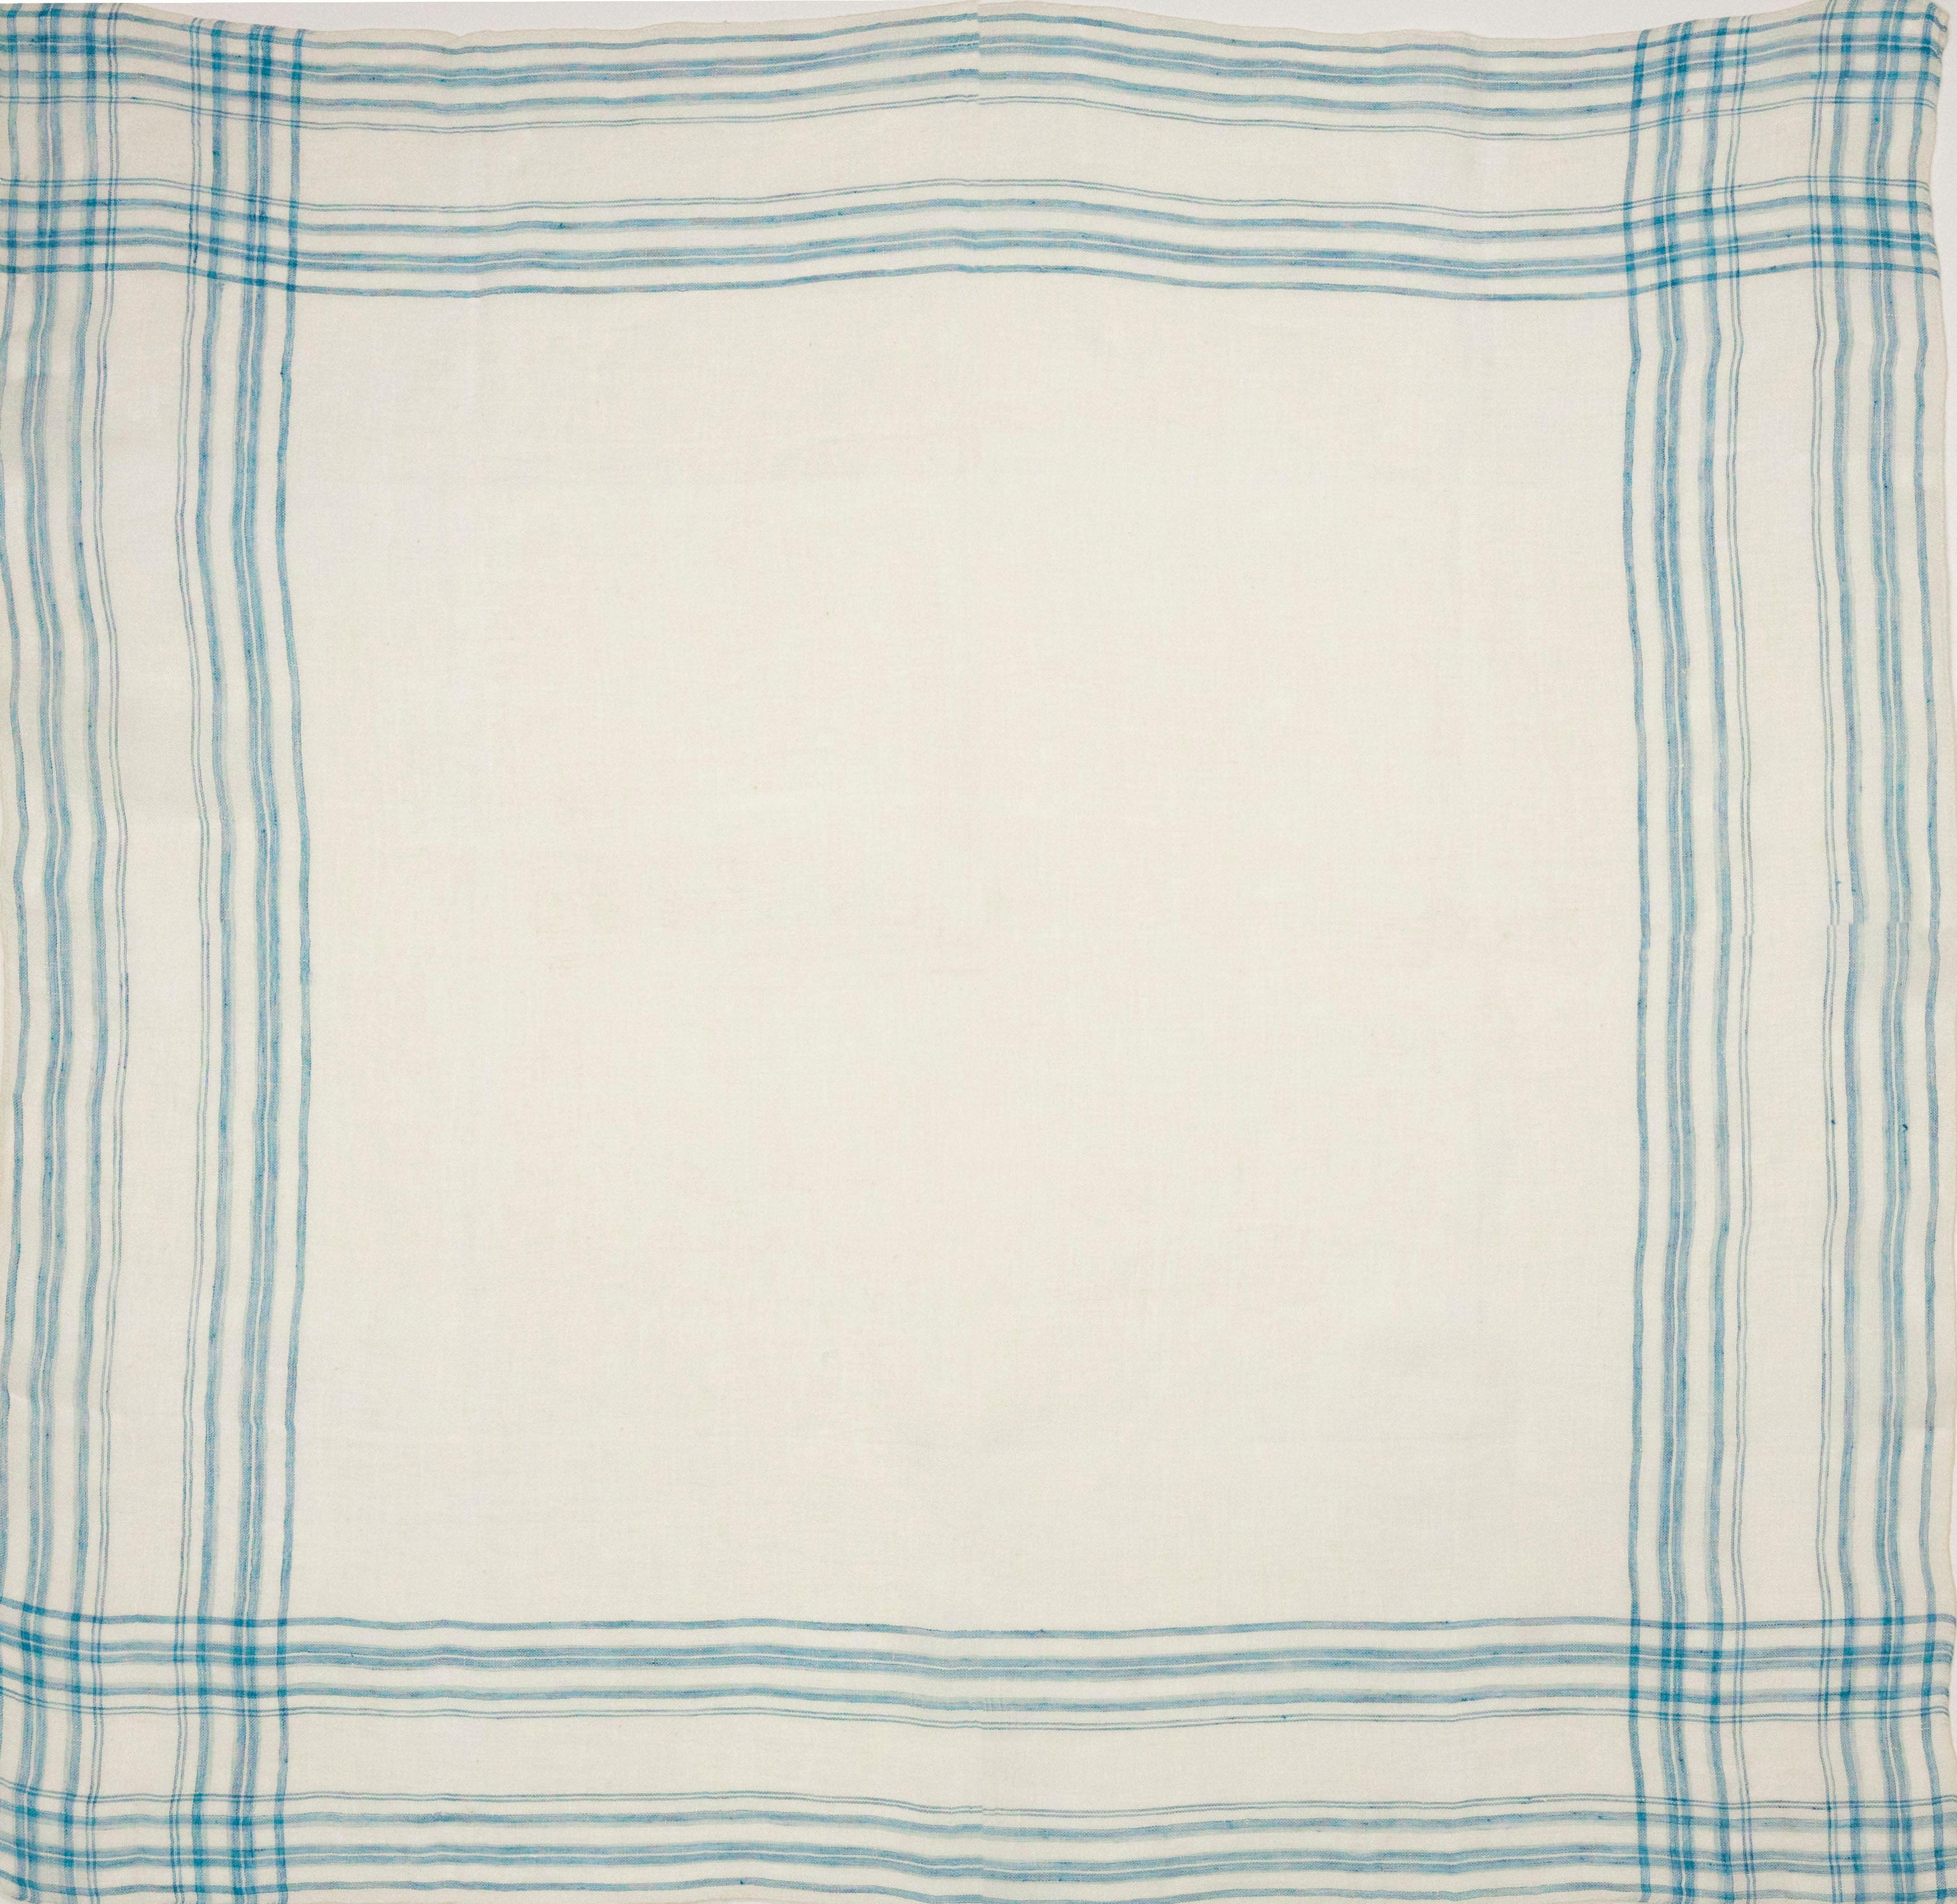 Indigo & White Linen Bordered Handkerchief - Burnley & Trowbridge Co.